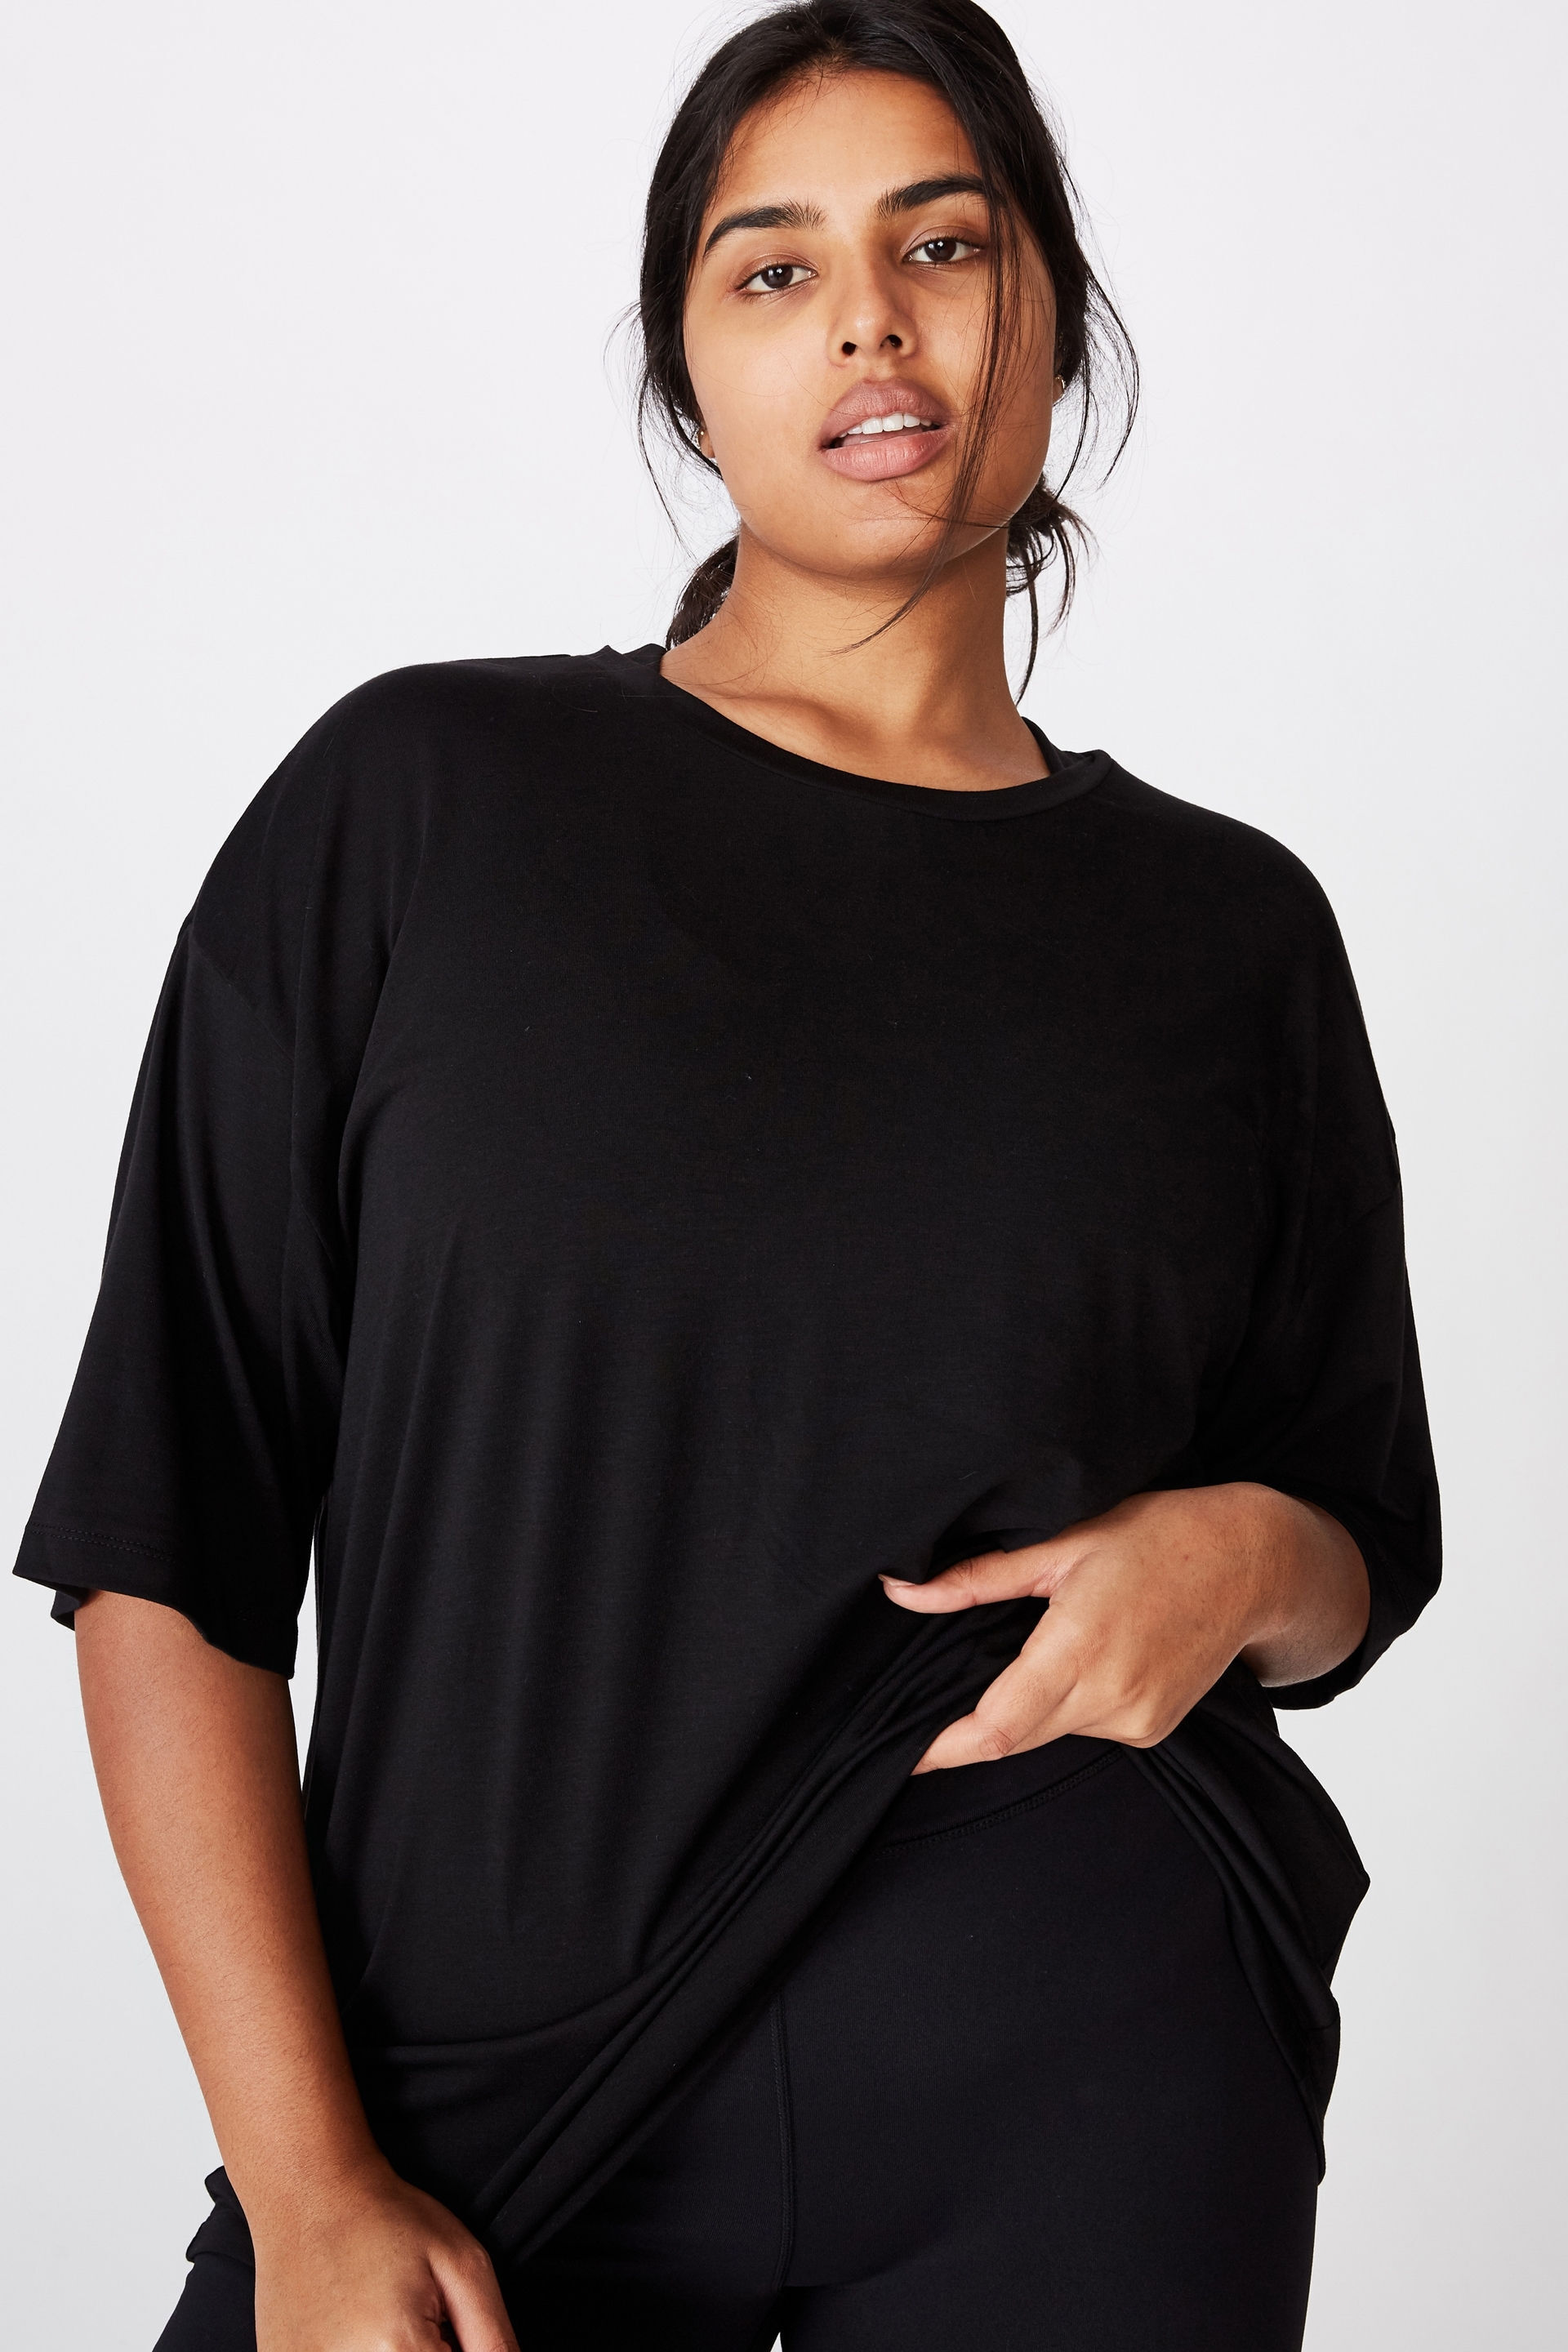 discount 78% Gondola Blu blouse Black WOMEN FASHION Shirts & T-shirts Lace 